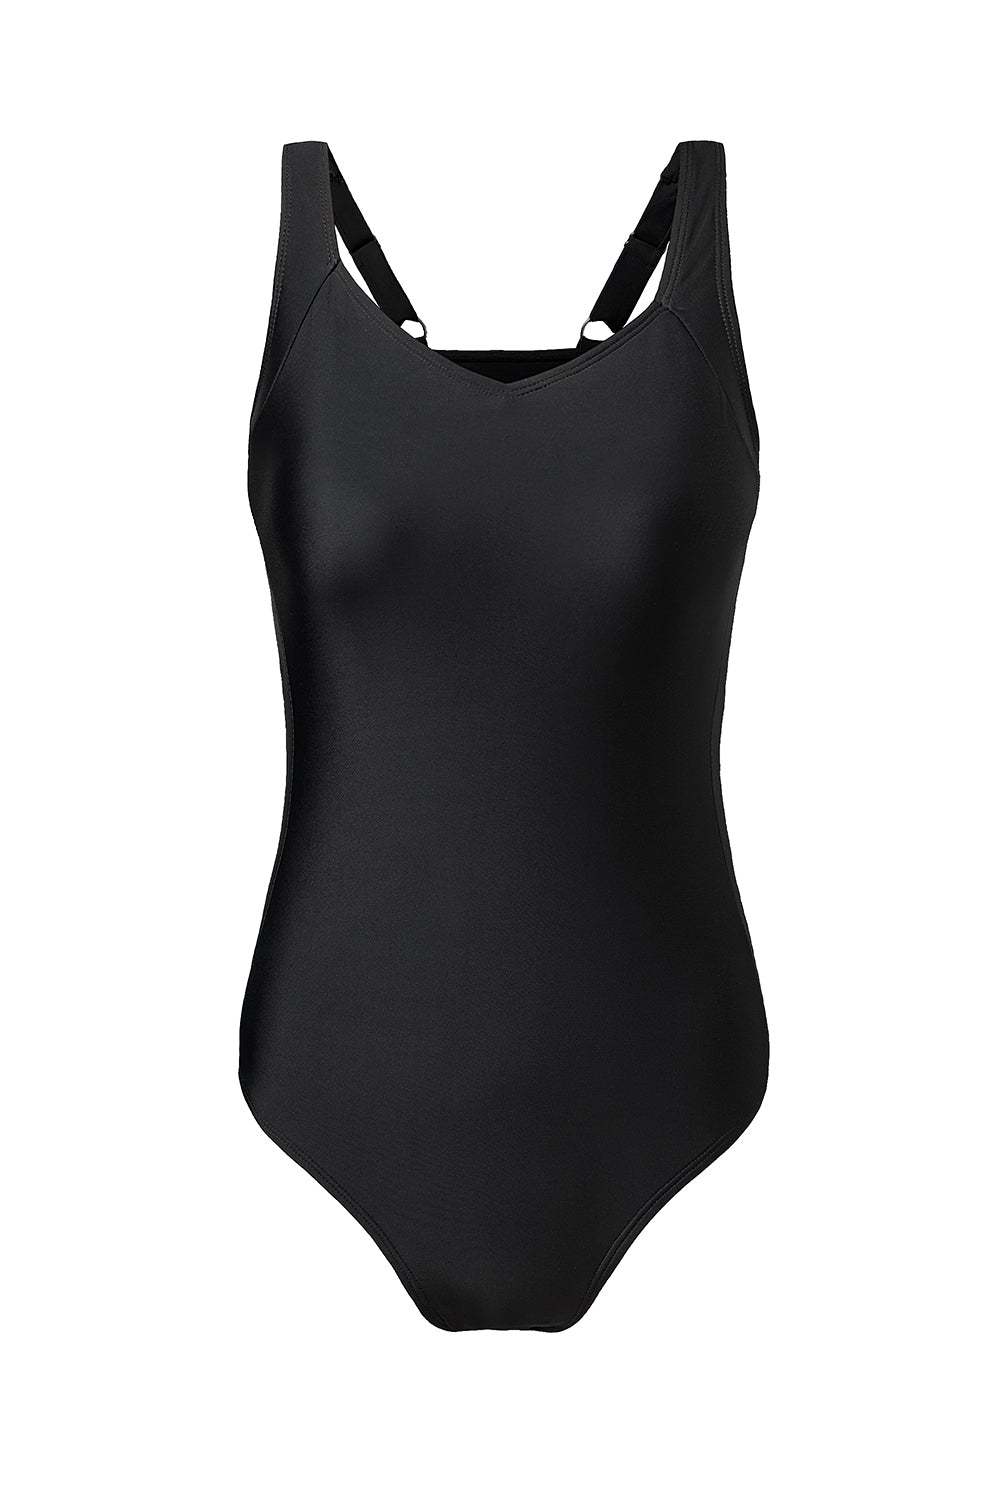 LC442787-102-S, LC442787-102-M, LC442787-102-L, LC442787-102-XL, LC442787-102-2XL, Black Women's One Piece Swimsuit Striped Pattern Print Sleeveless Bathing Suit